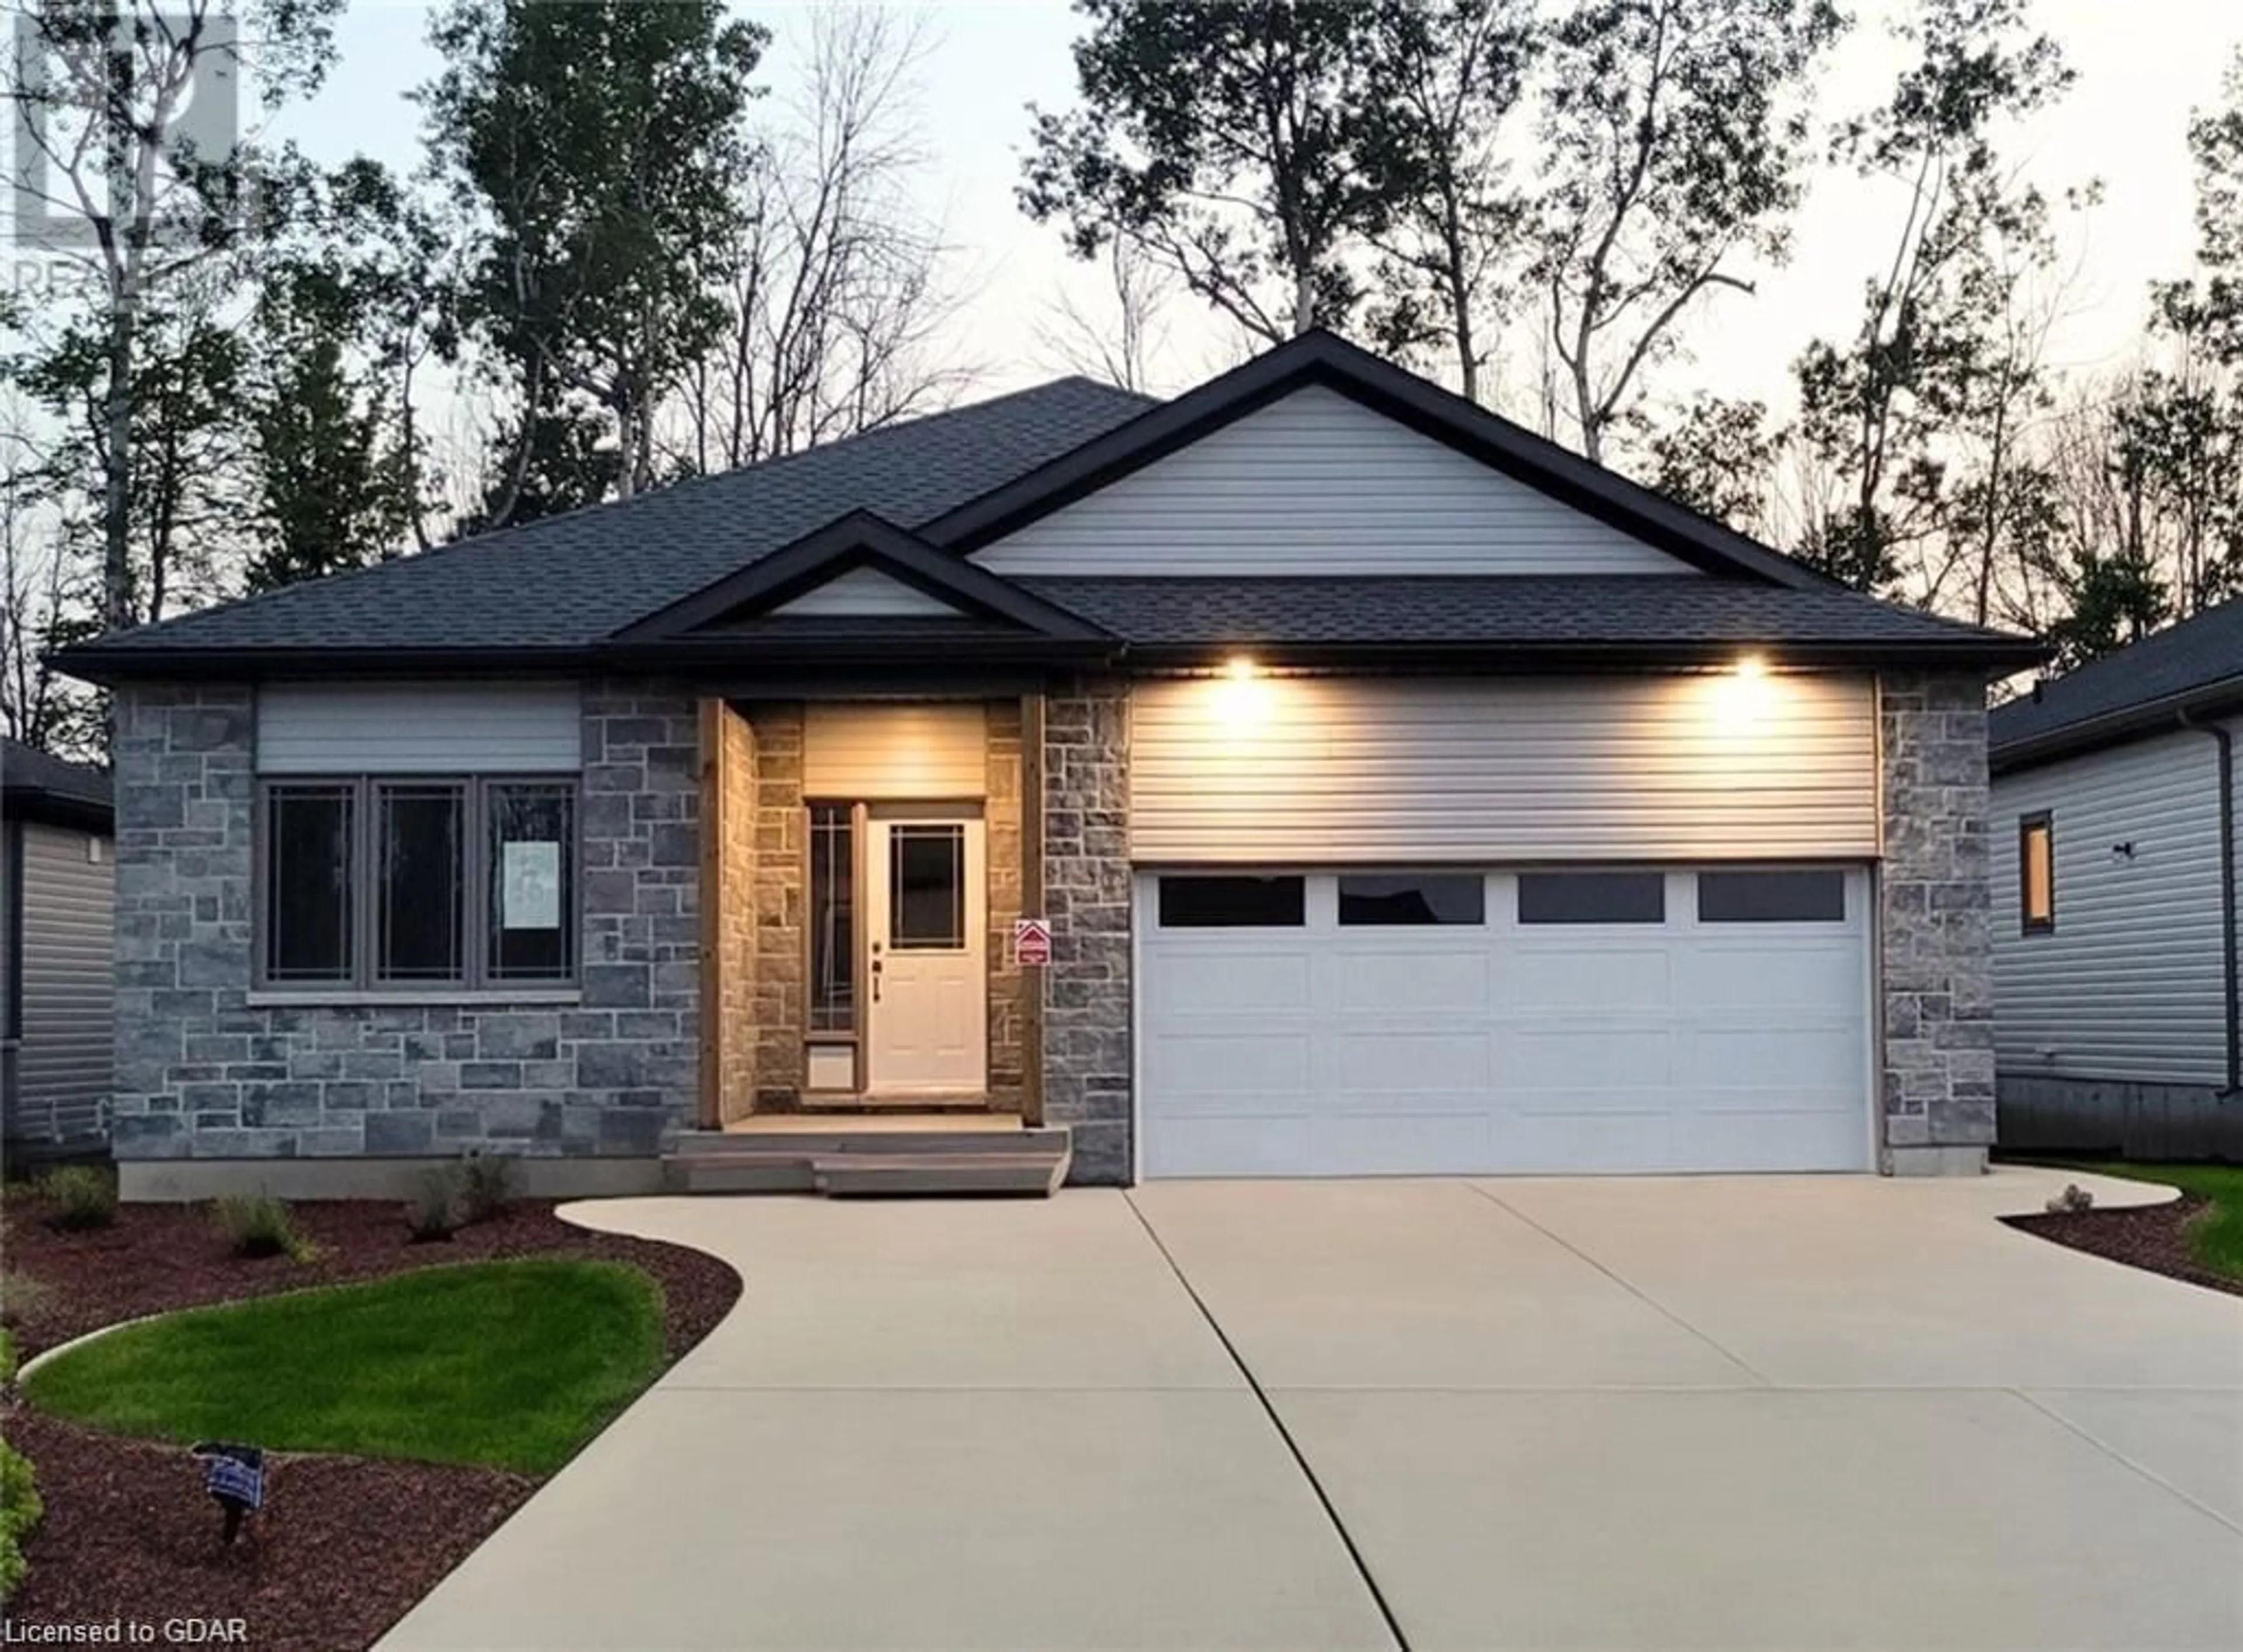 Home with brick exterior material for 266 Adley Dr, Brockville Ontario K6V 7J2